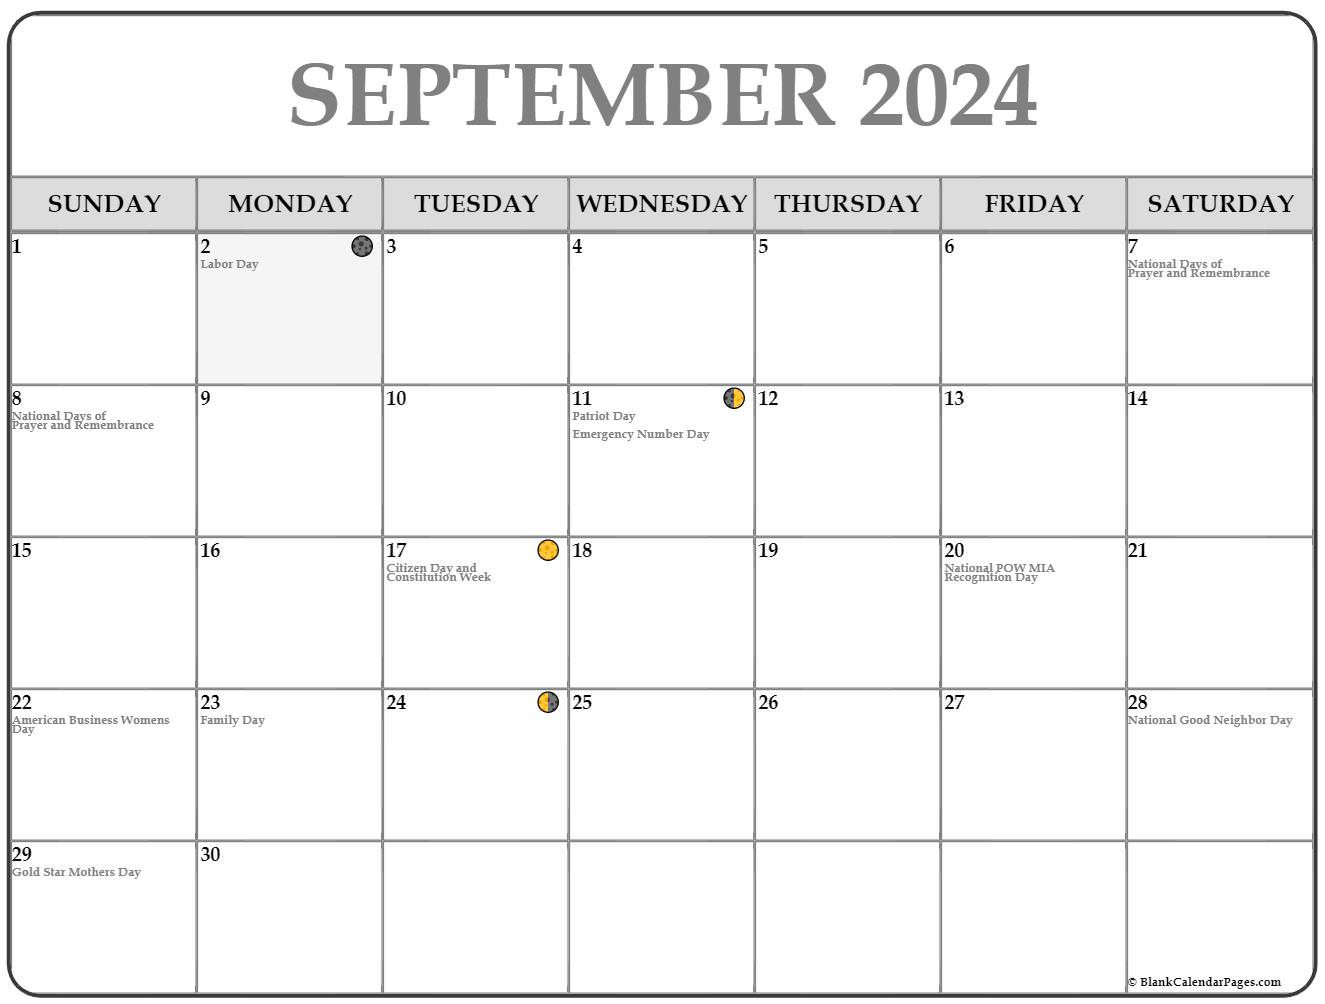 September 2022 Lunar Calendar Moon Phase Calendar